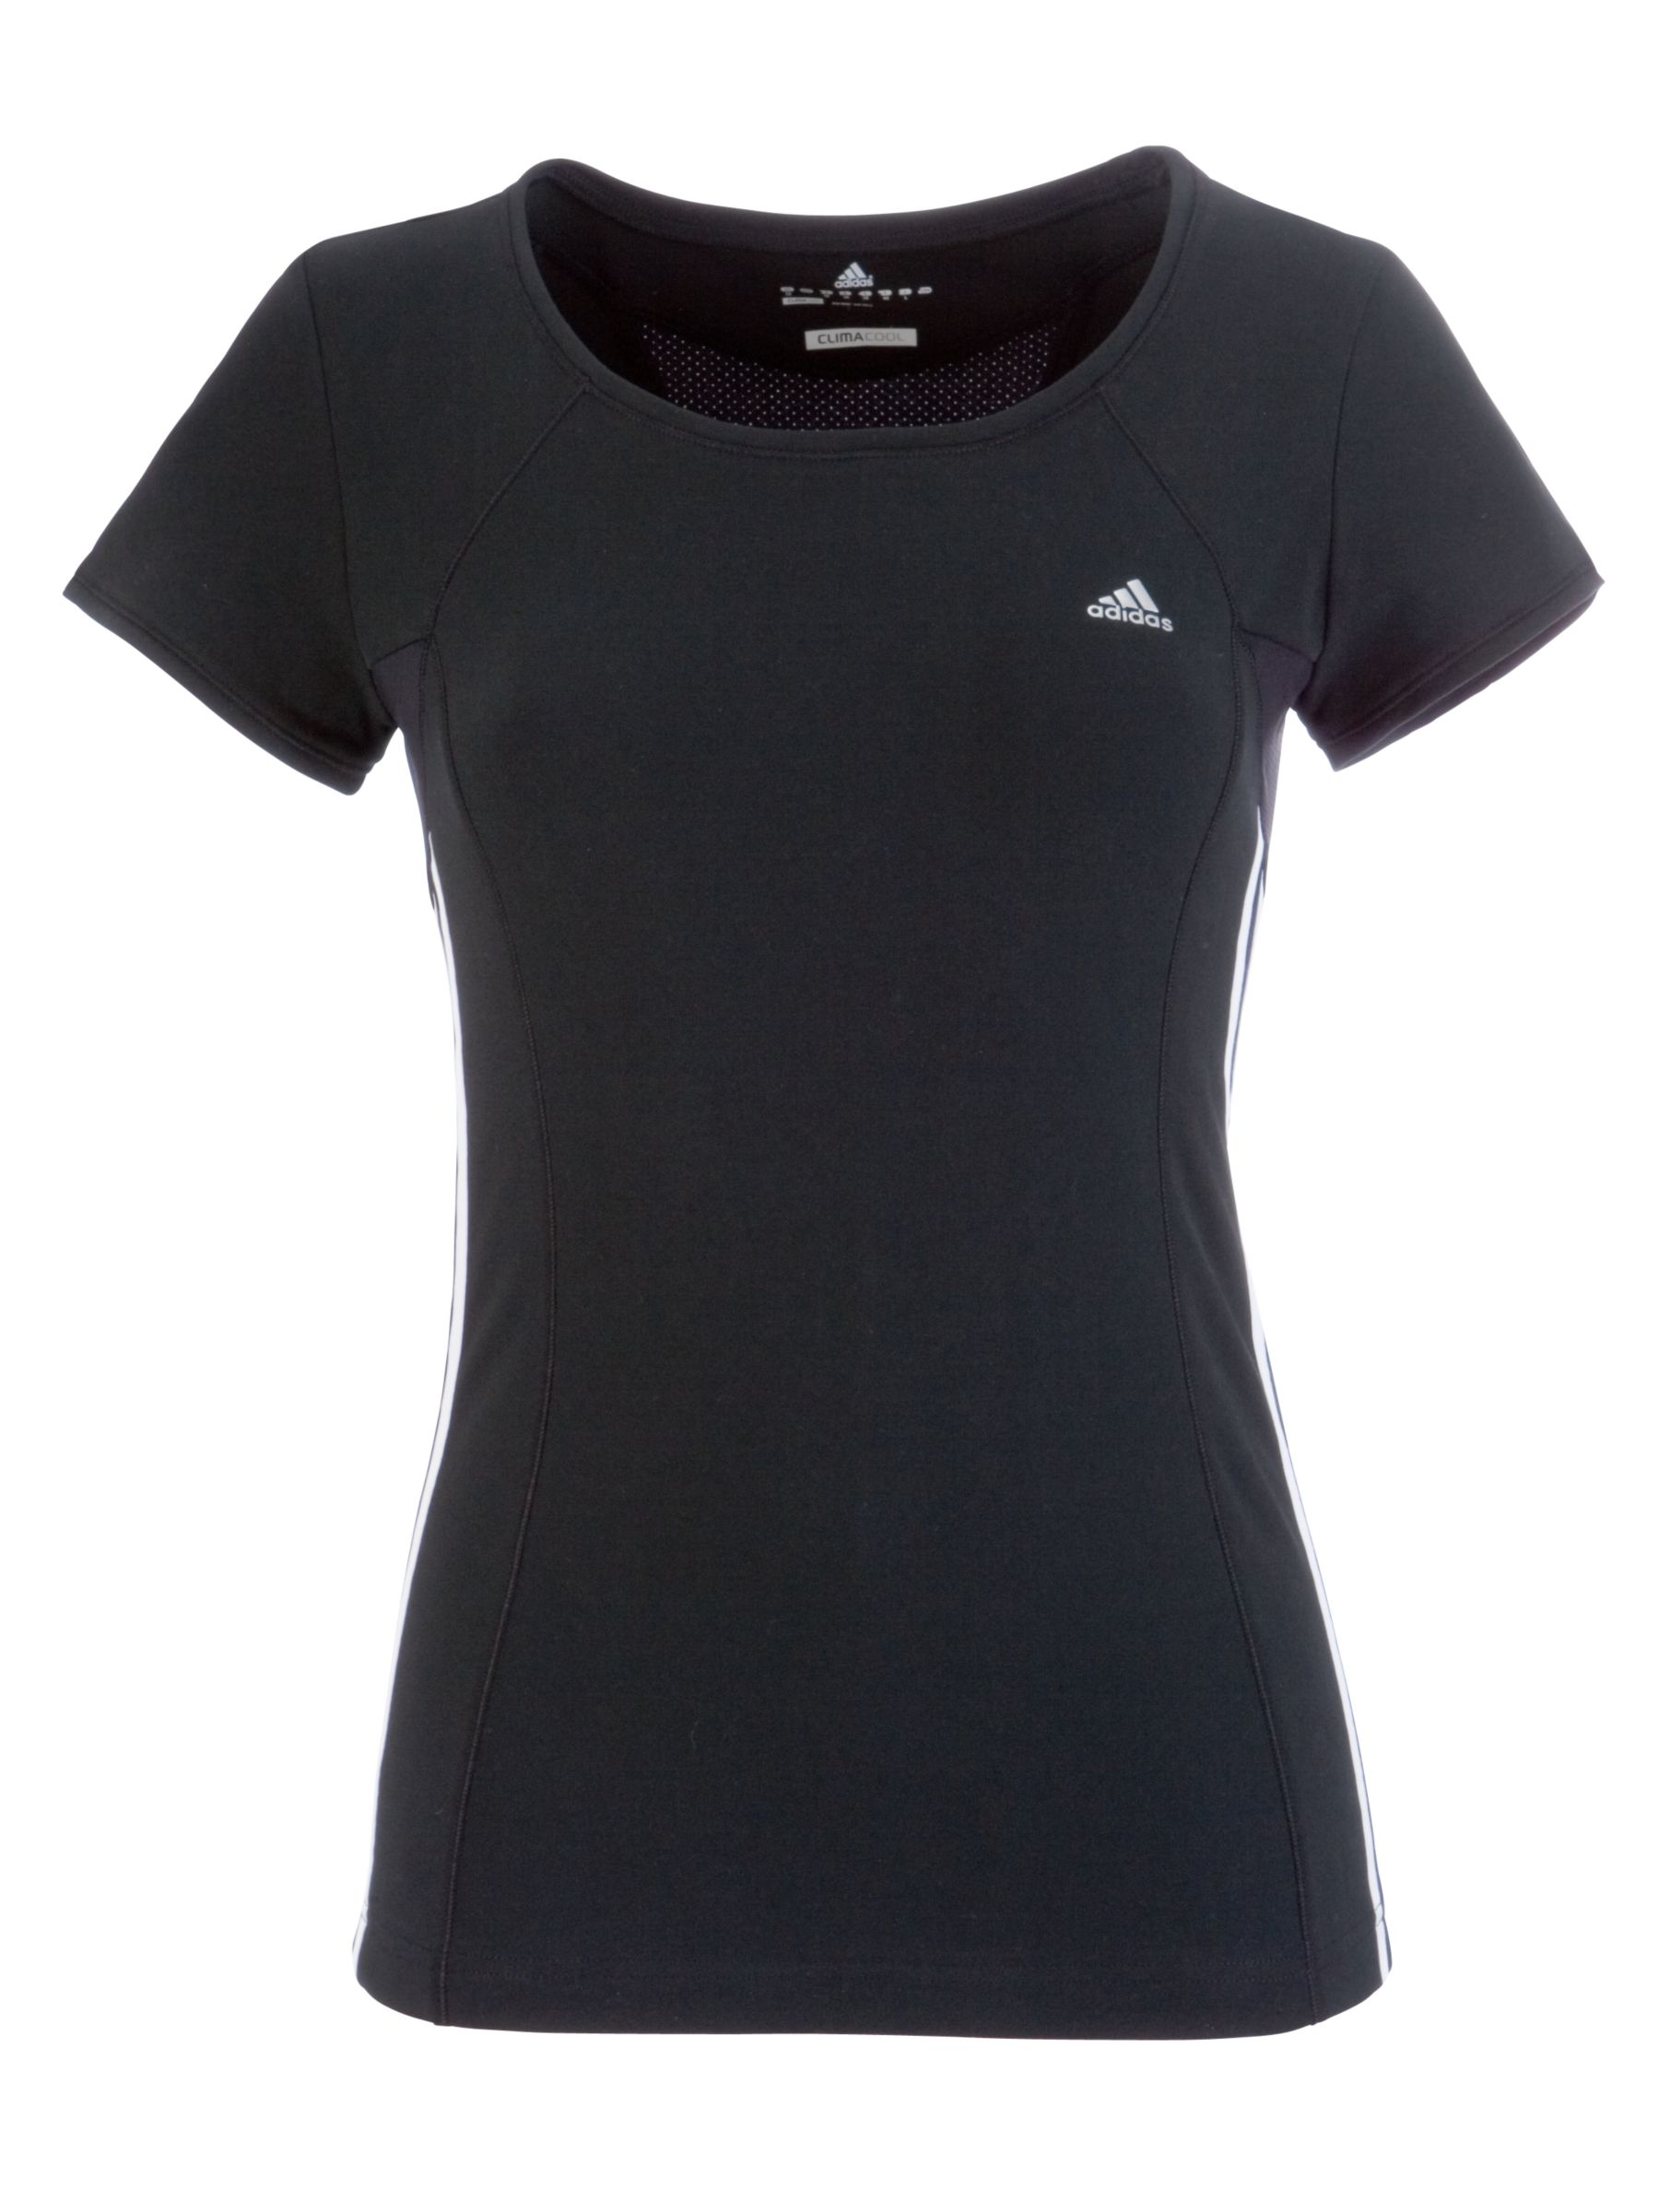 Adidas Clima 365 Core T-Shirt, Black